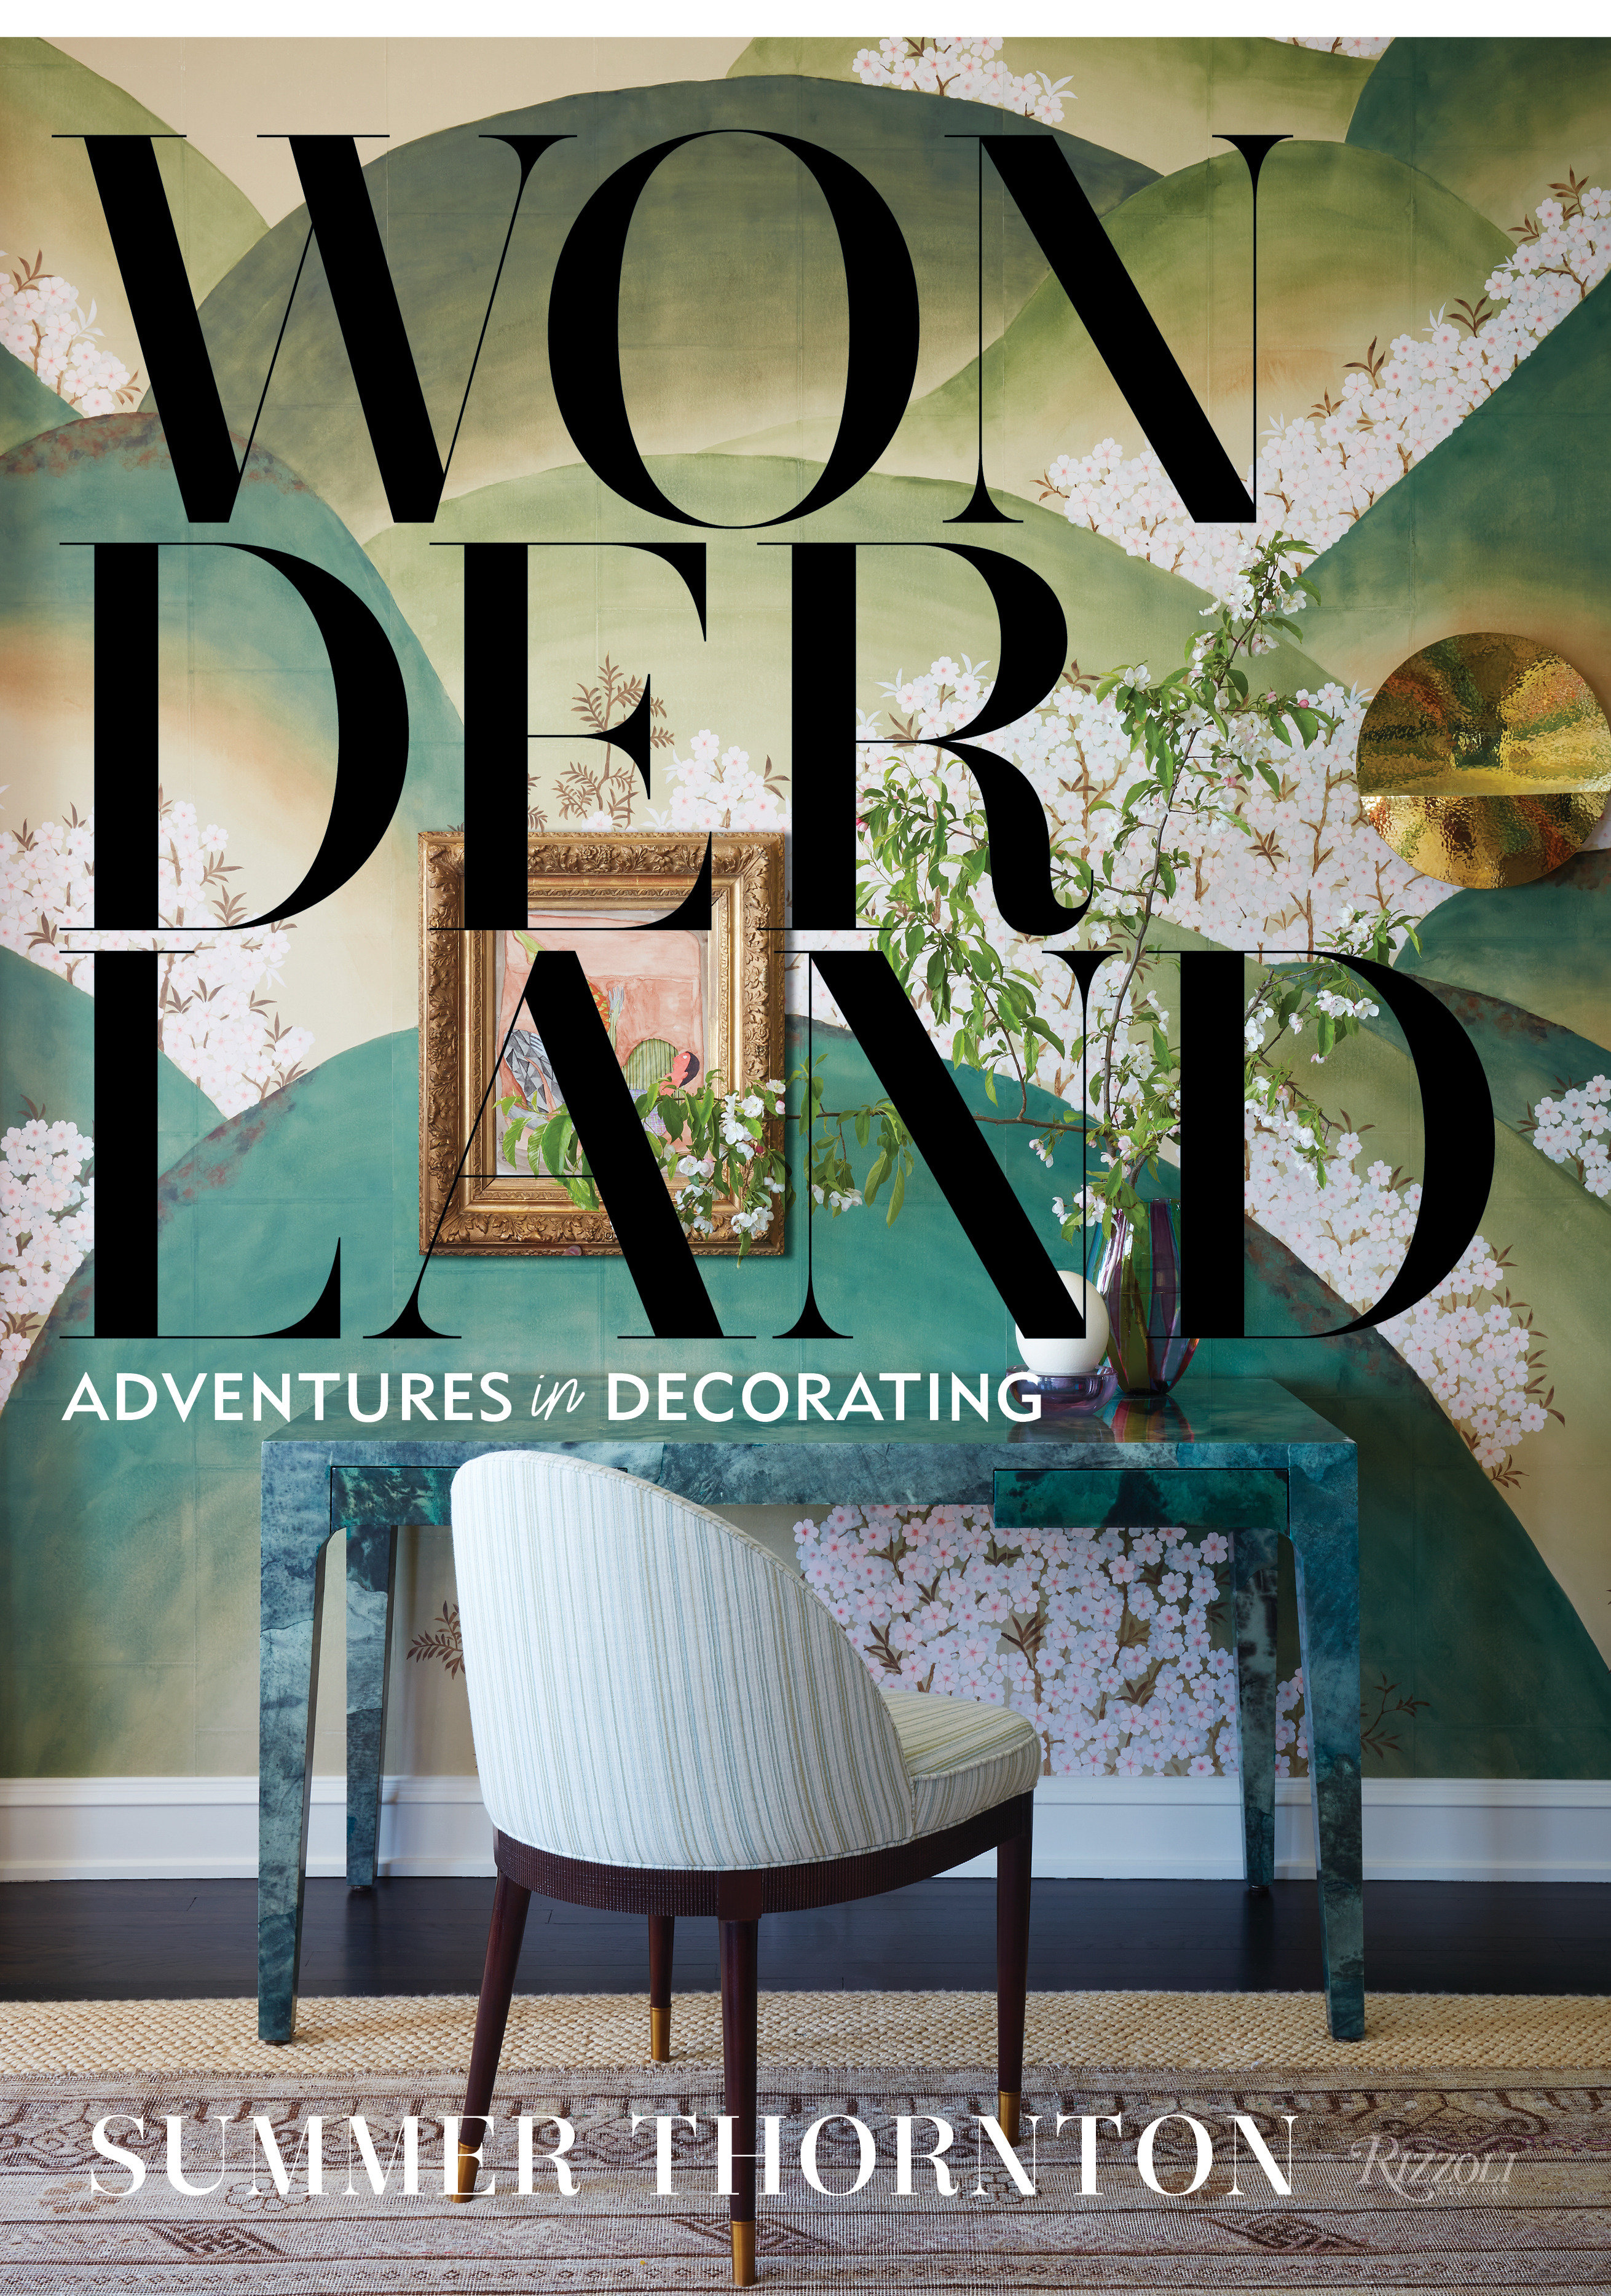 Wonderland (Hardcover Book)